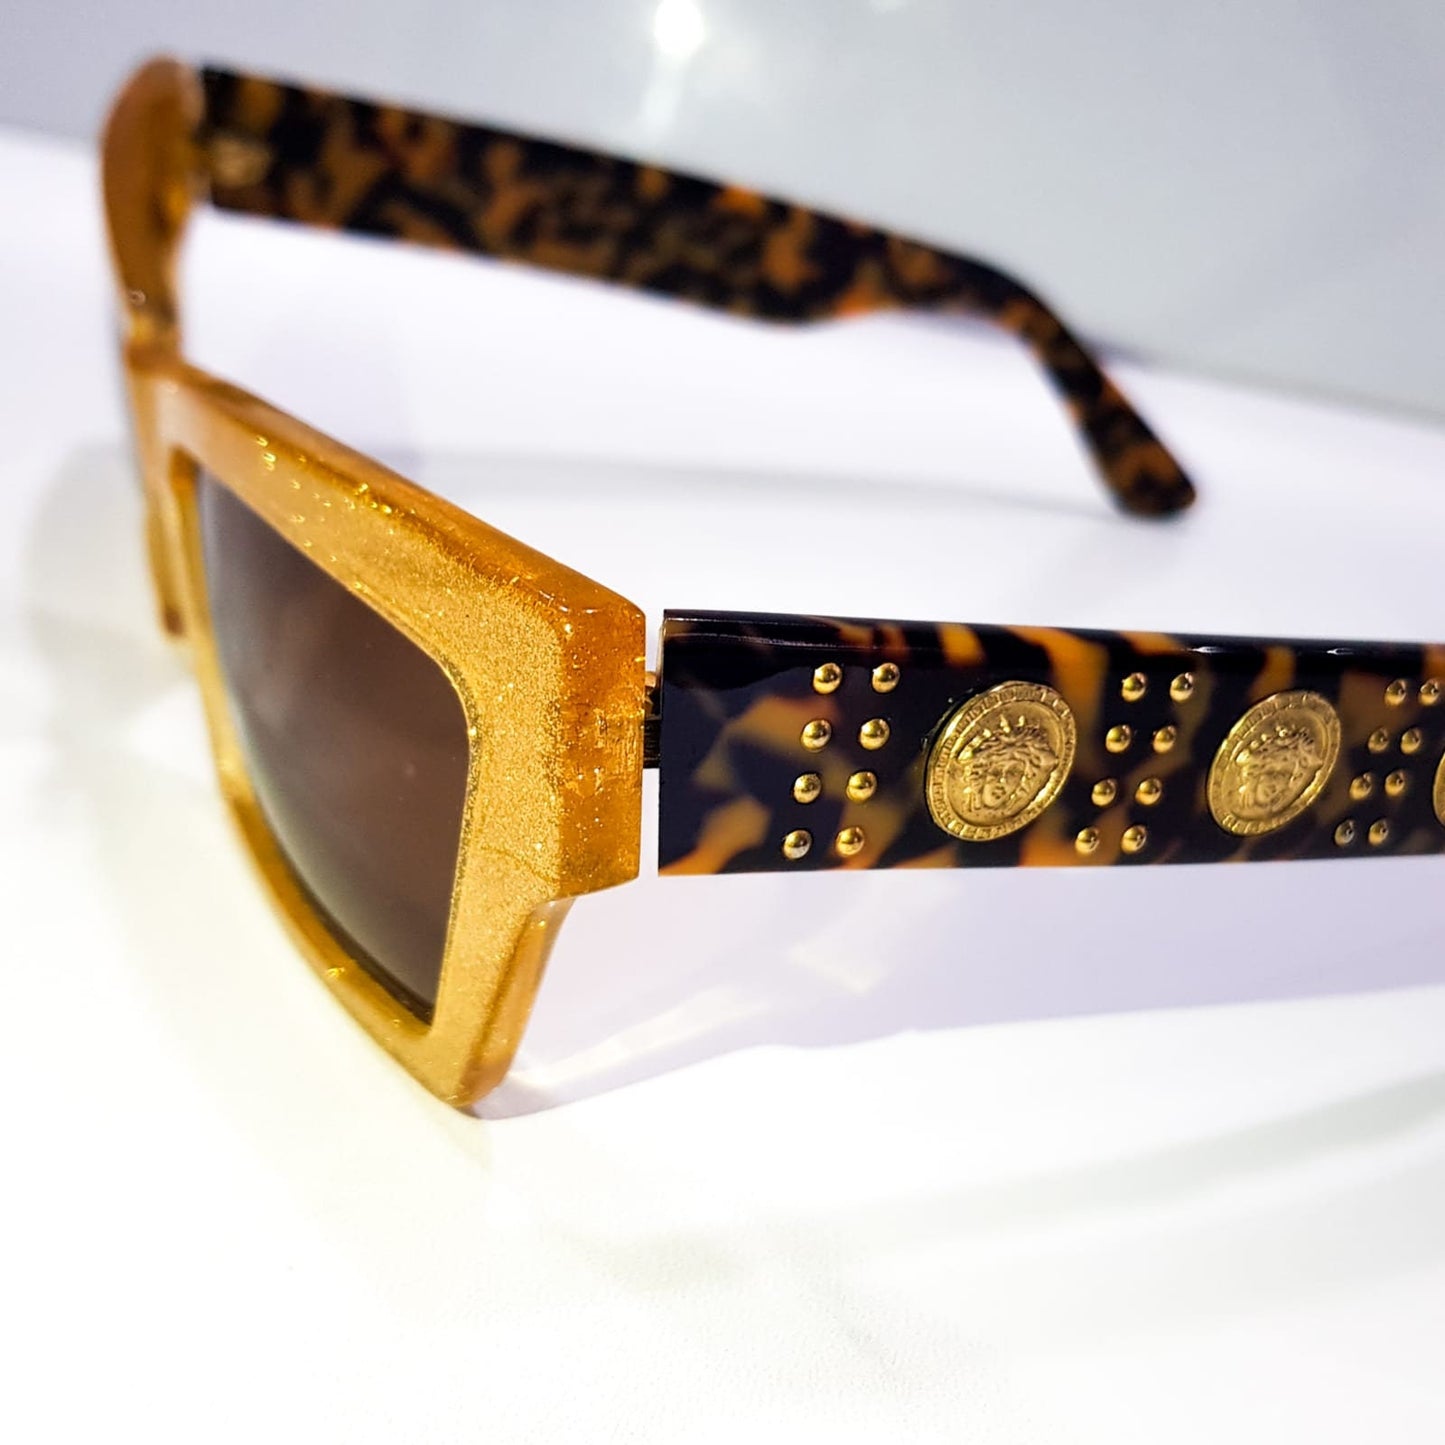 Gianni Versace s16 复古太阳镜闪耀月牙